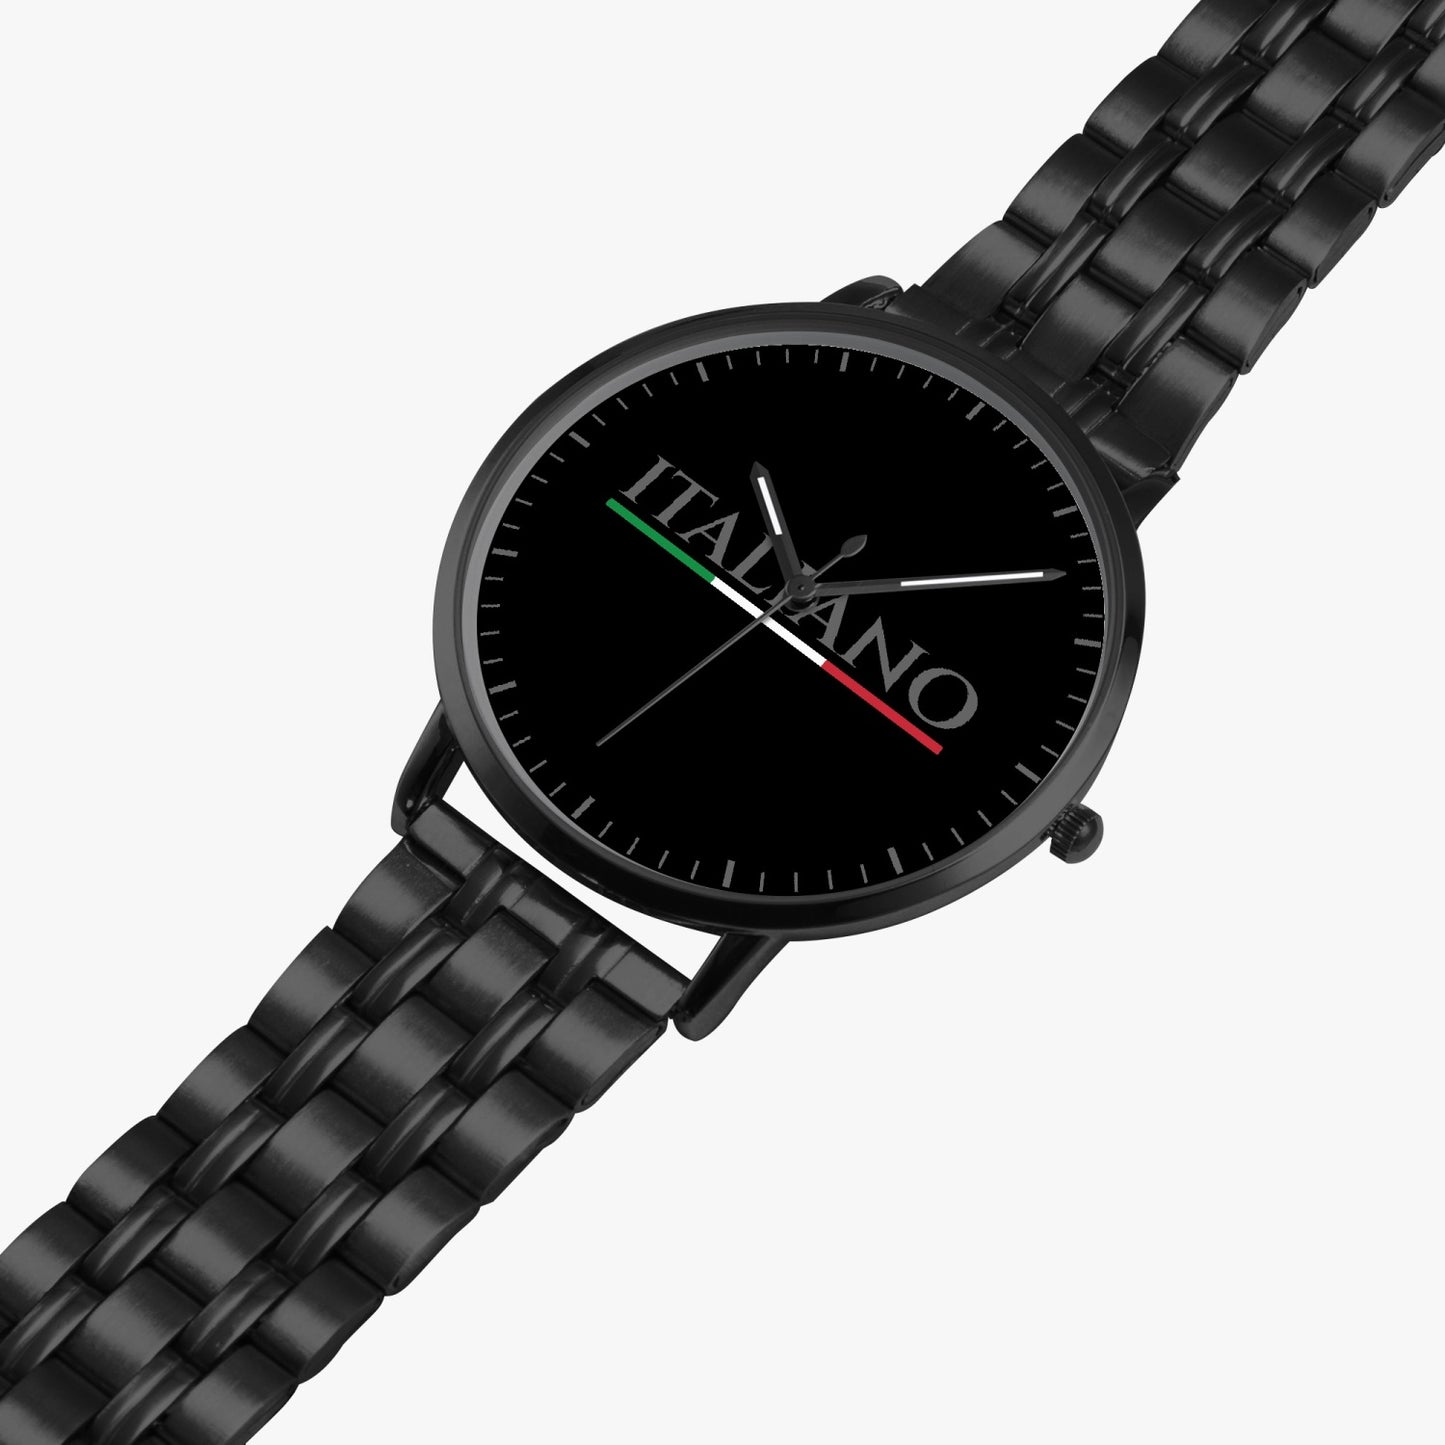 Ultra-thin Premium SEIKO Quartz watch Movement - ITALIANO - black